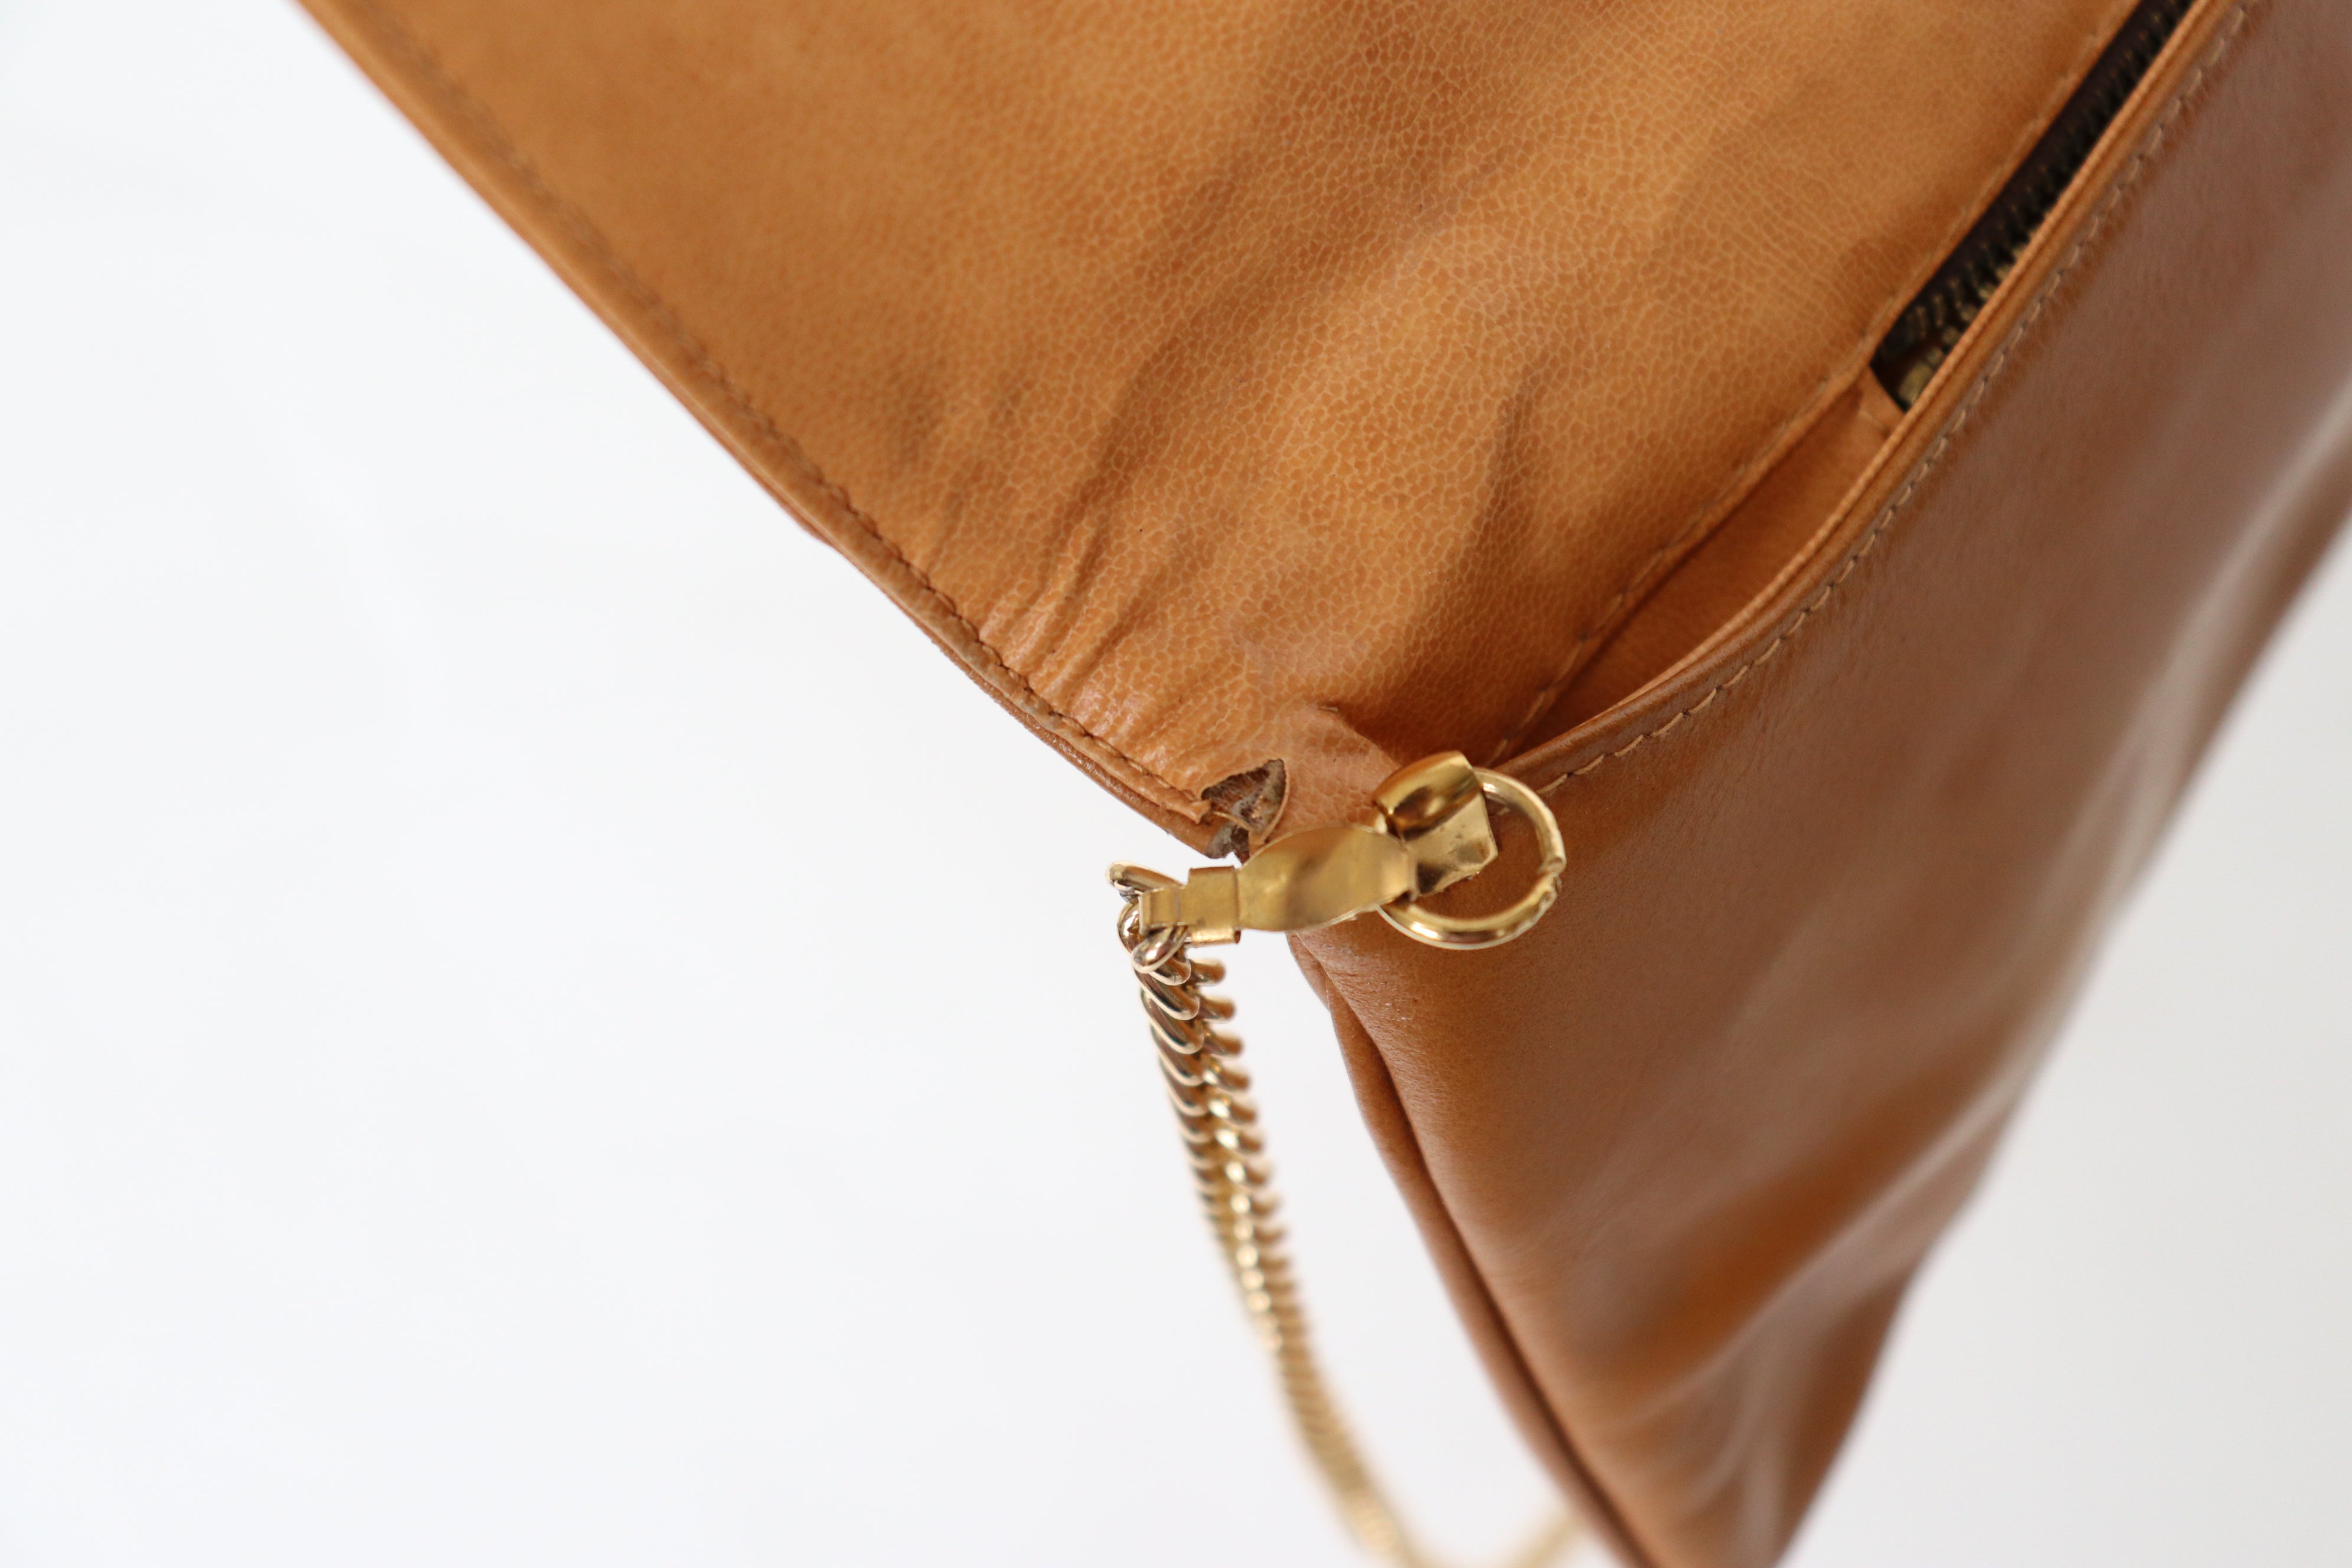 Vintage Clutch Bag - Chain Strap - Faux Leather - Caramel Tan Brown 1980s